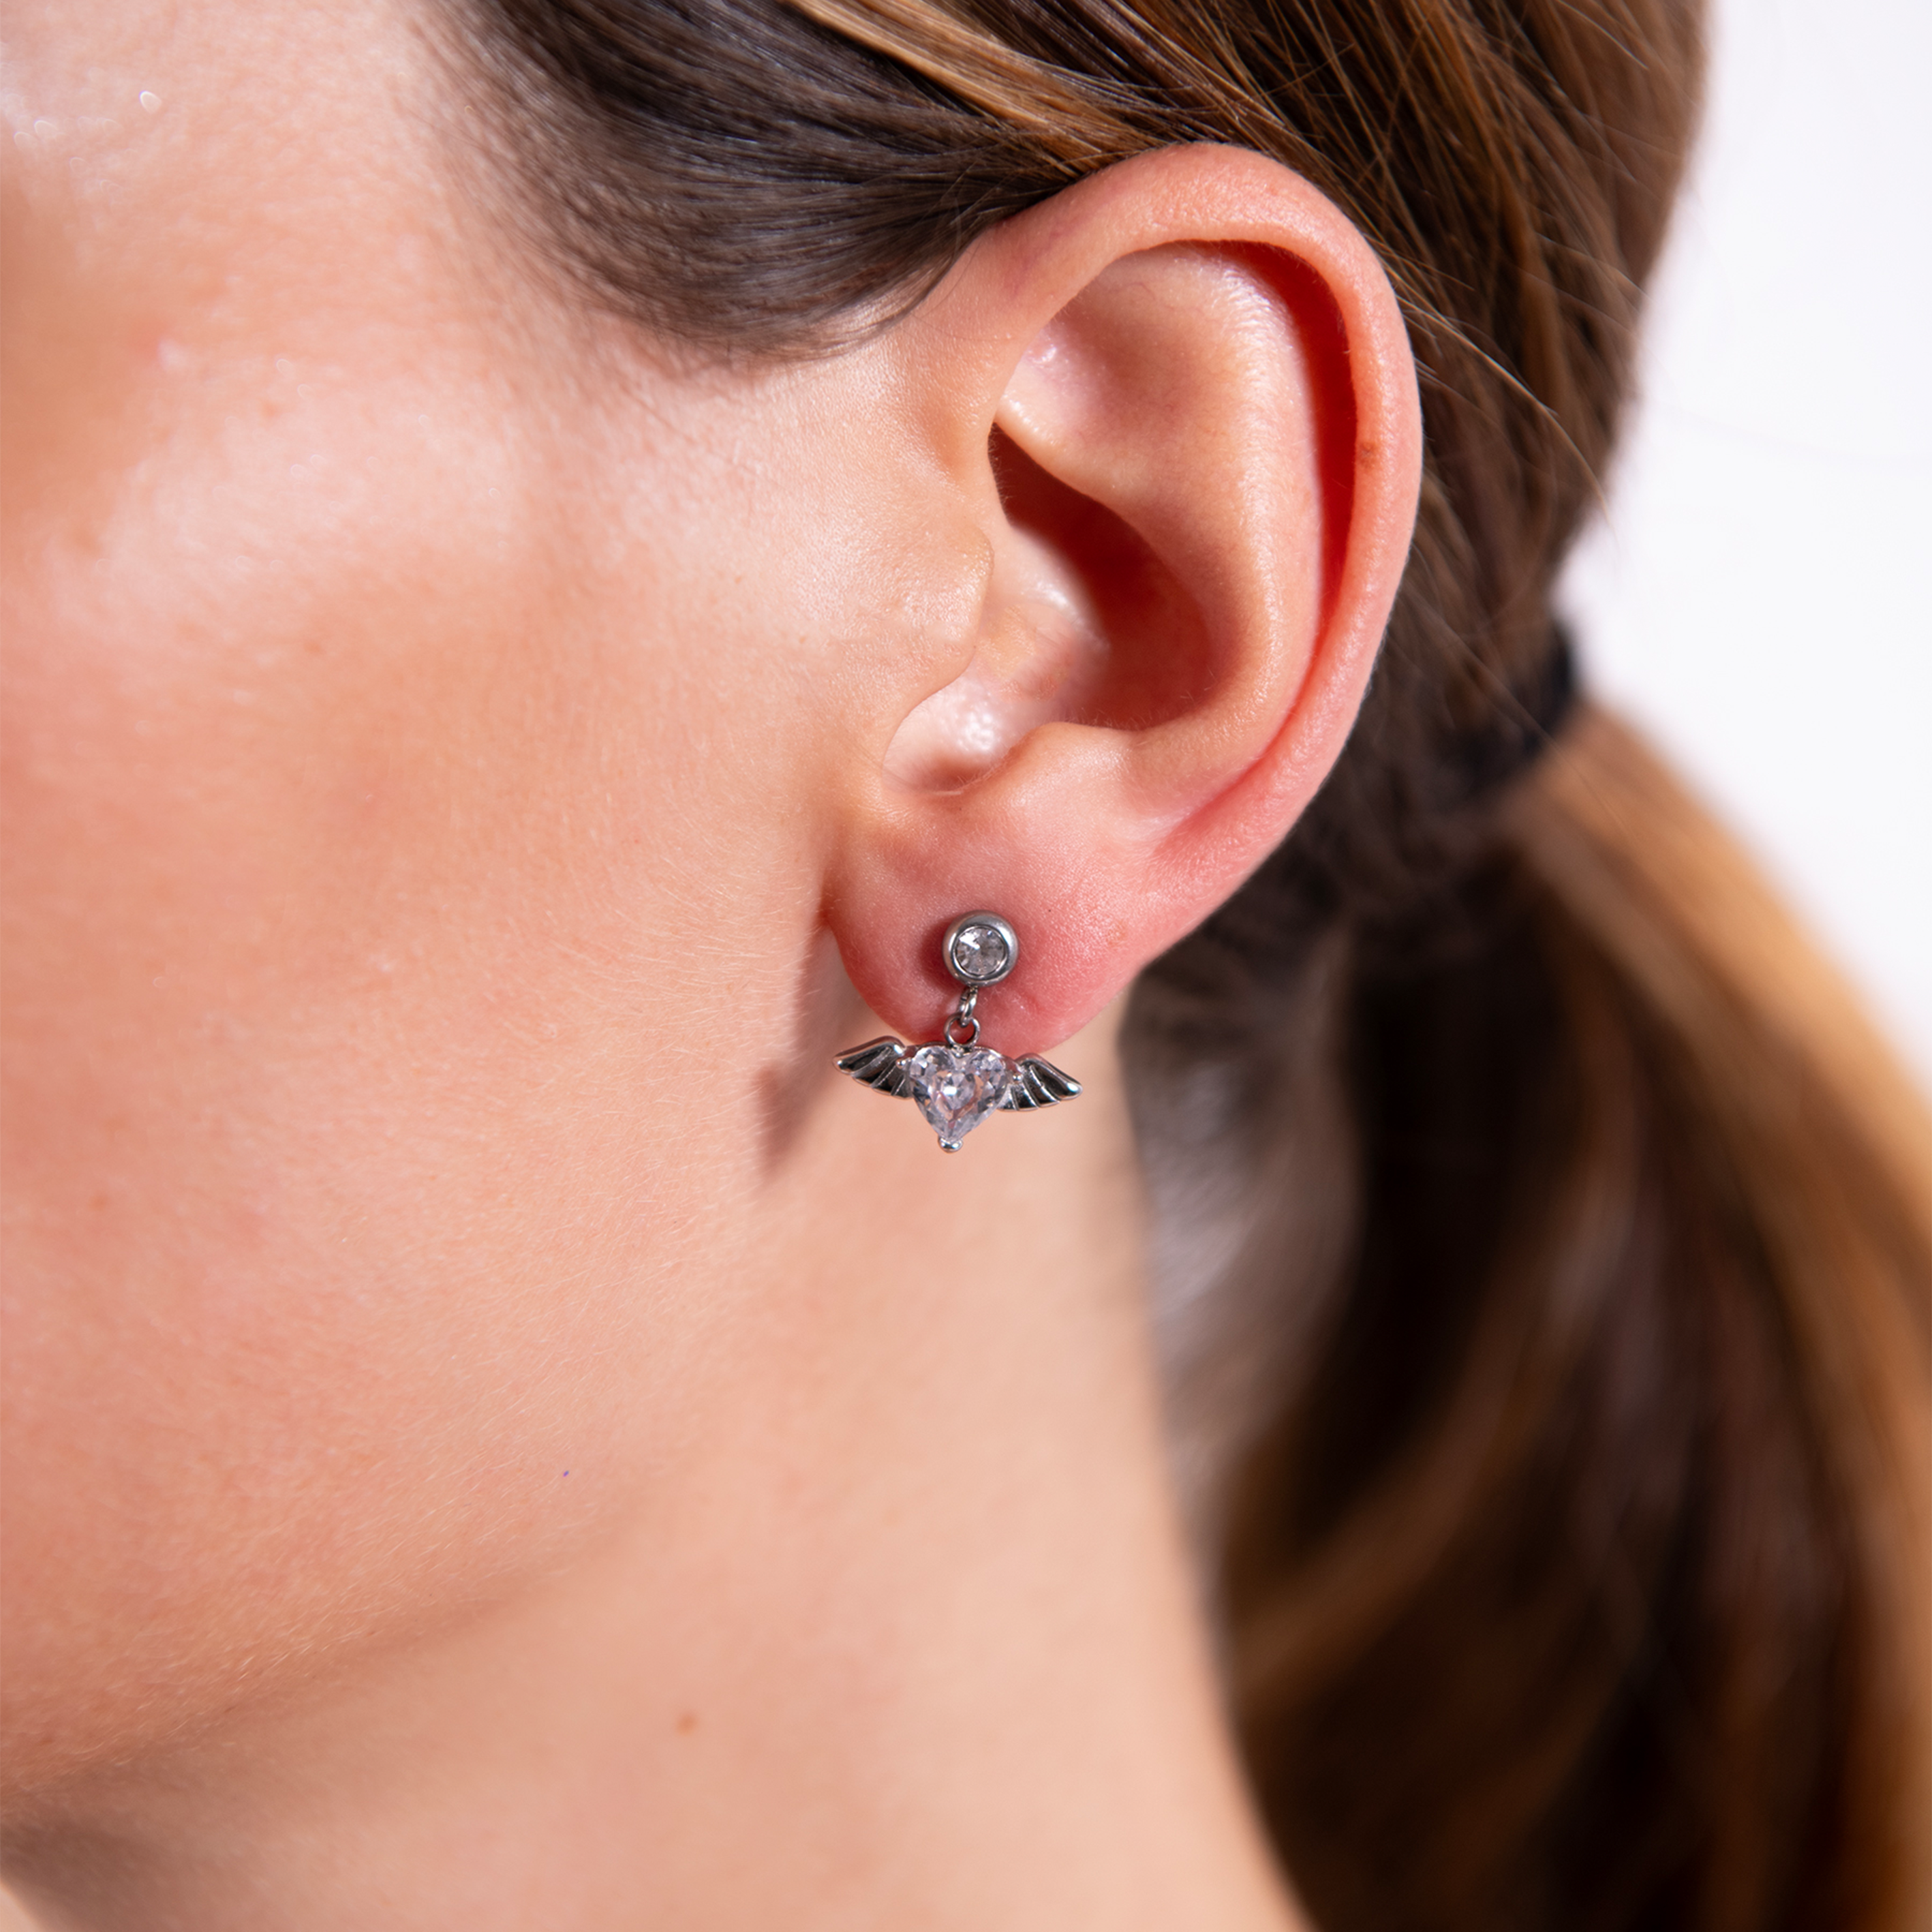 Coveri Jewels Earrings - ECJ362 orecchini